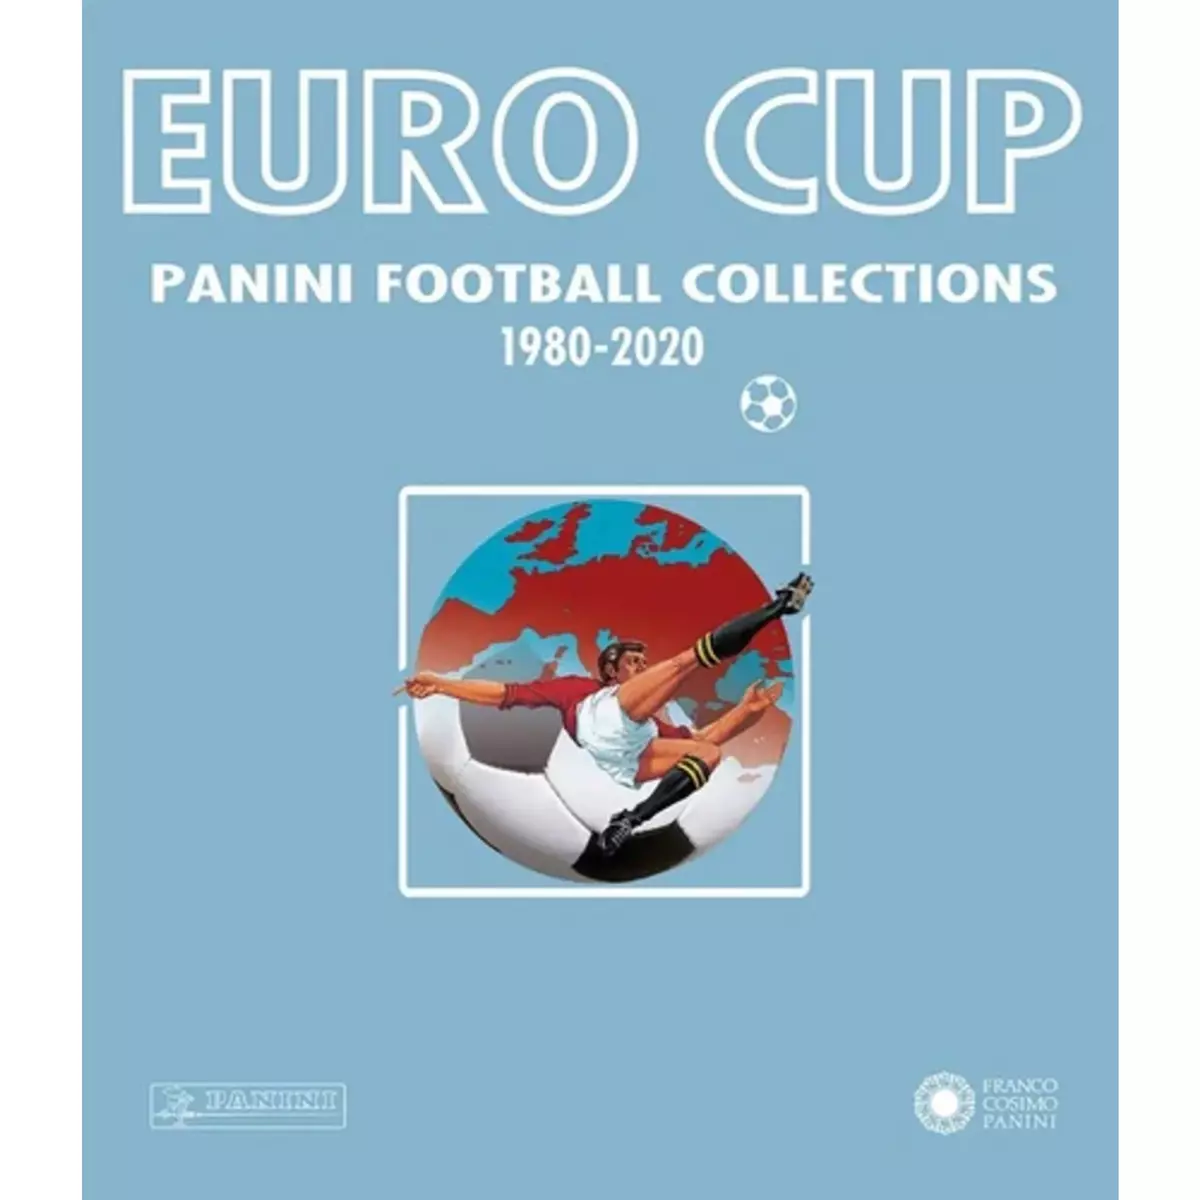  EURO CUP. PANINI FOOTBALL COLLECTIONS 1980-2020, Panini